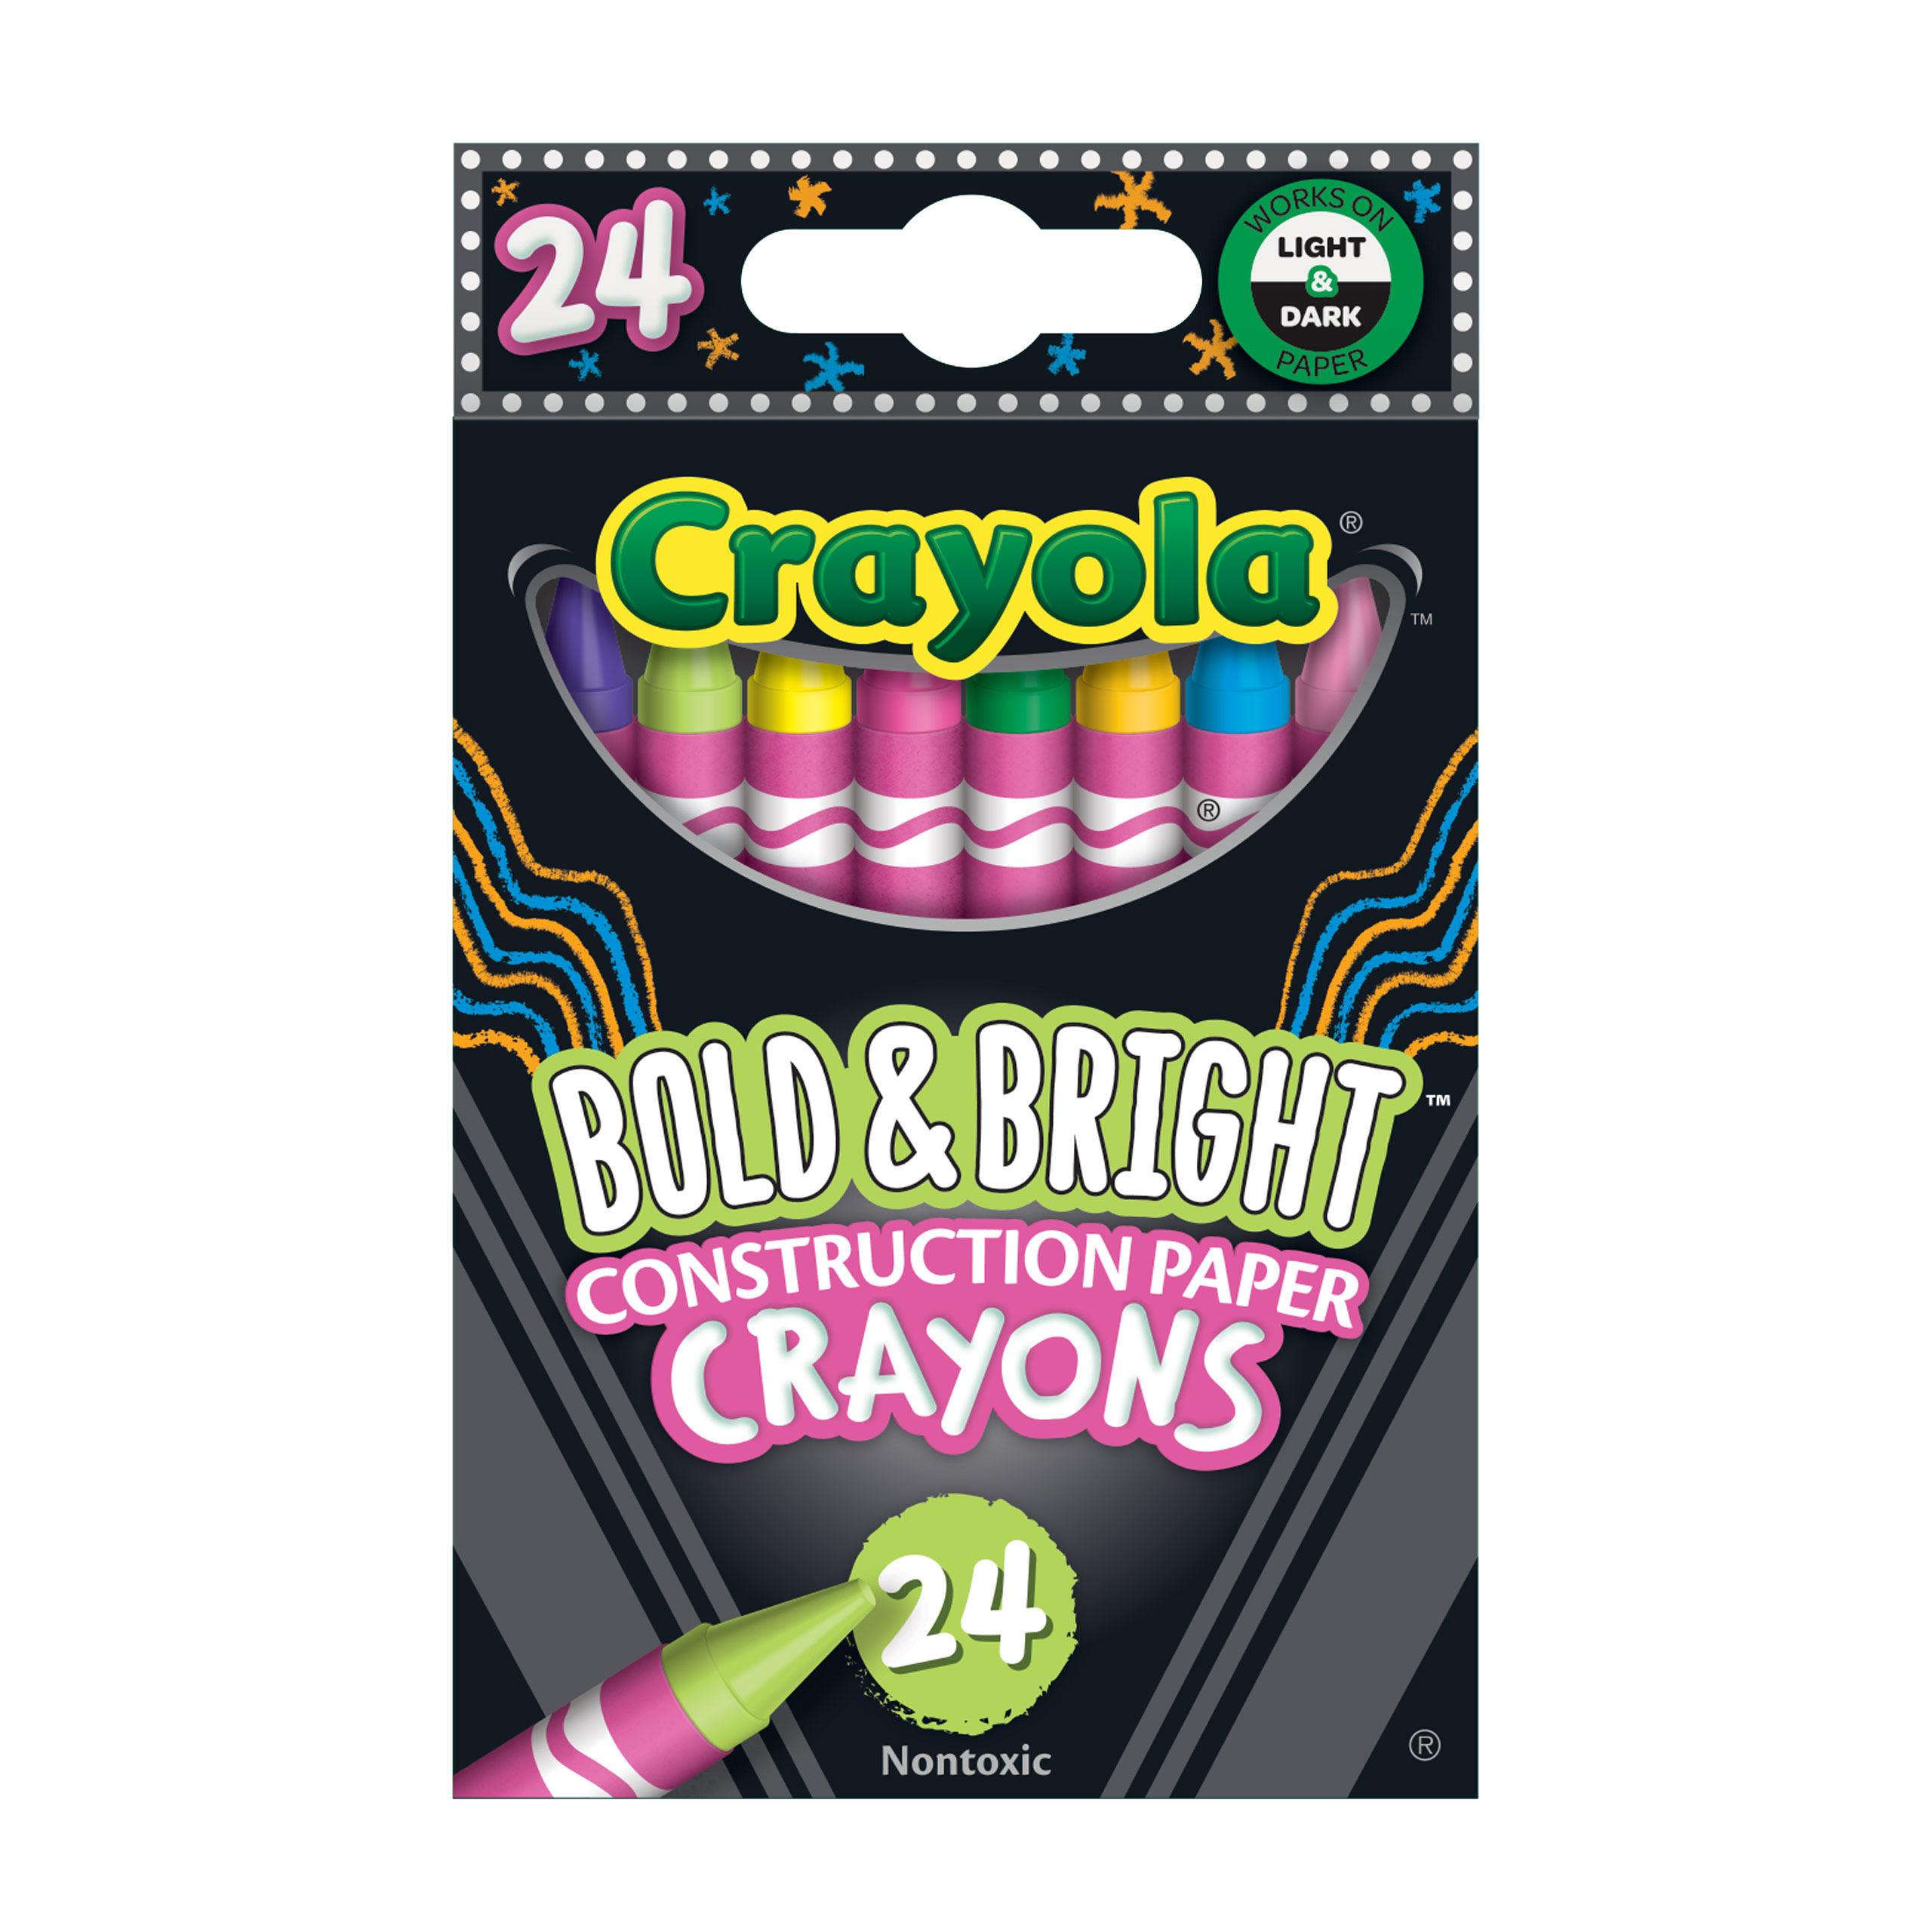 Crayola Bold and Bright Construction Paper Crayons